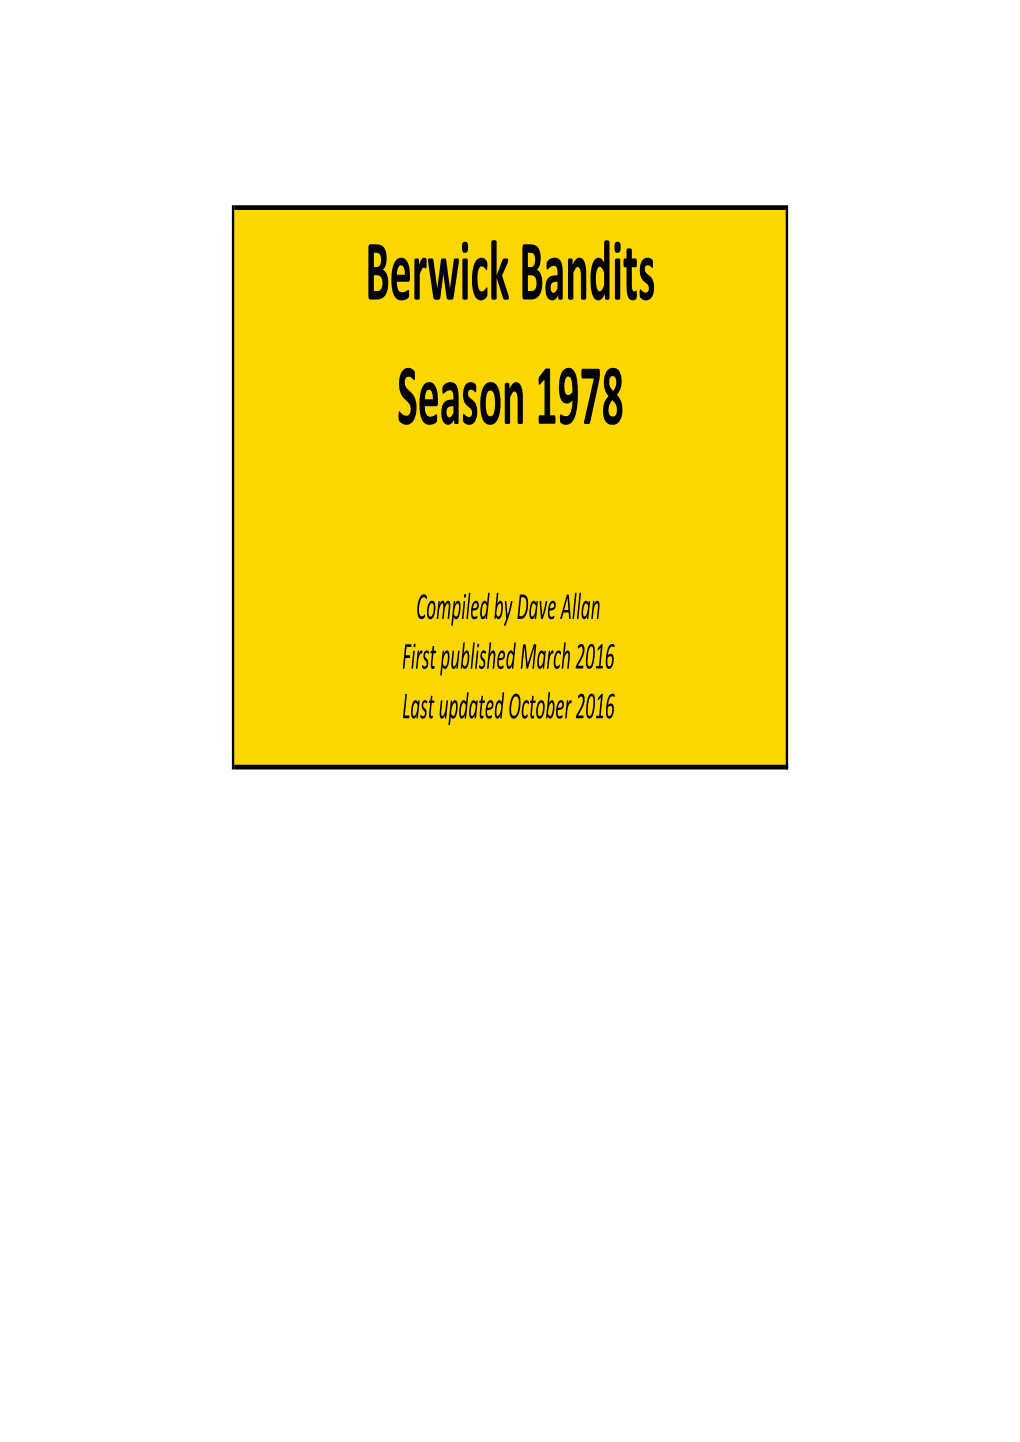 Berwick Bandits Season 1978